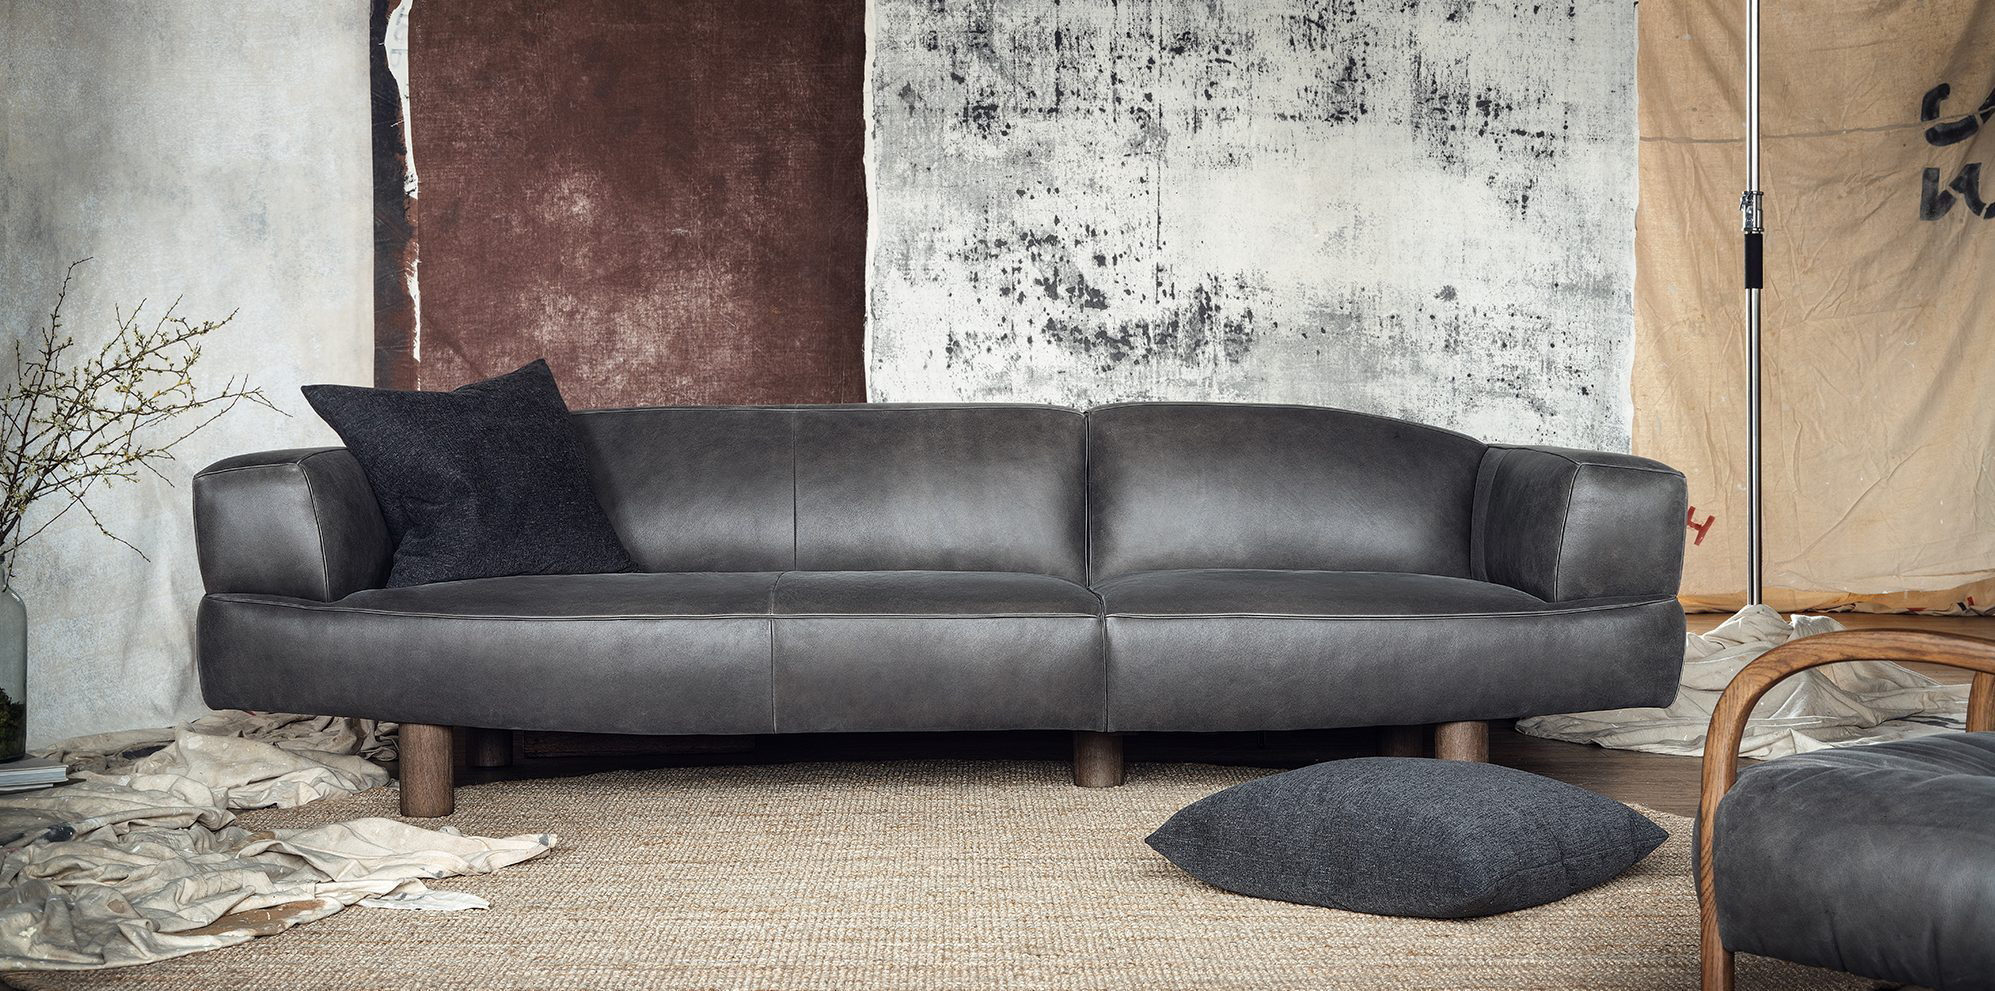 Alexander & James Asymmetry 4 Seater Split Sofa in Native Charcoal